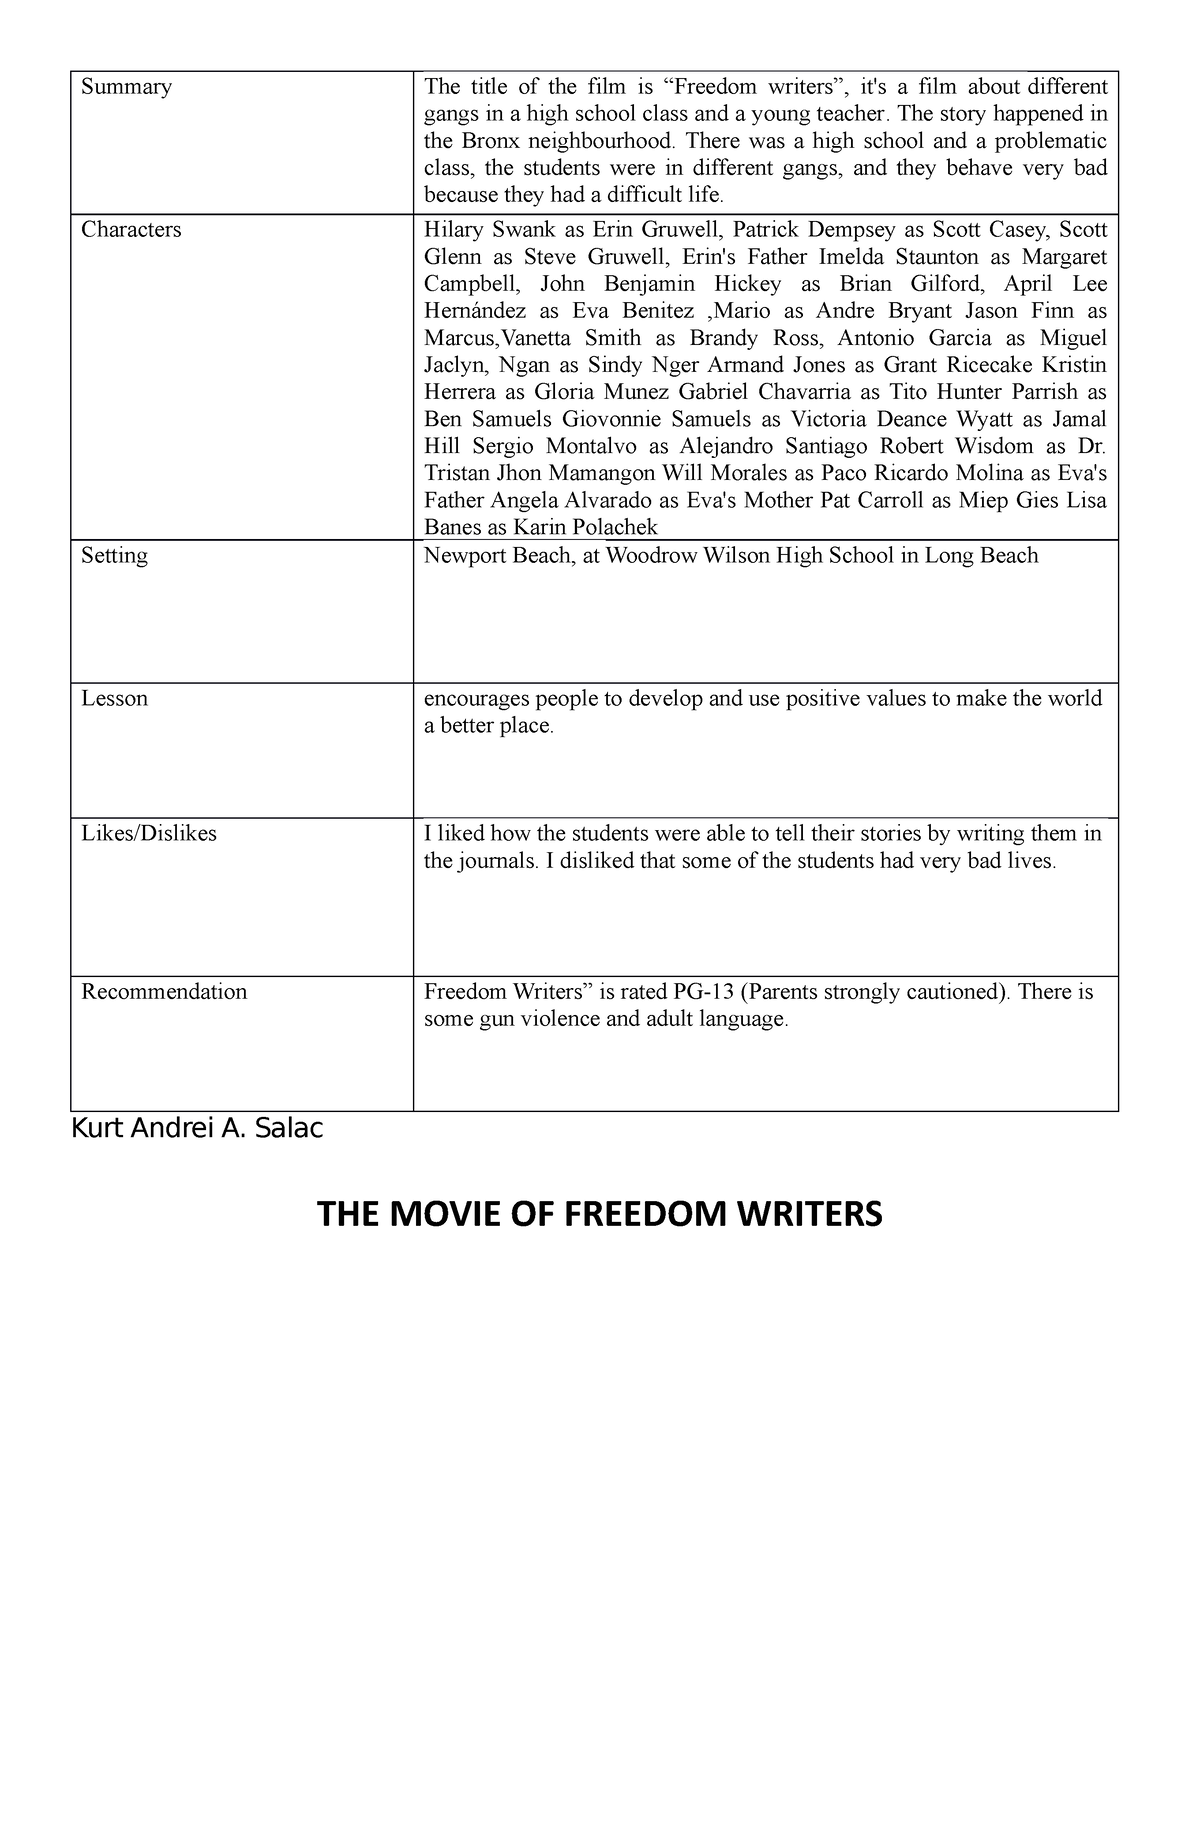 freedom writers summary essay